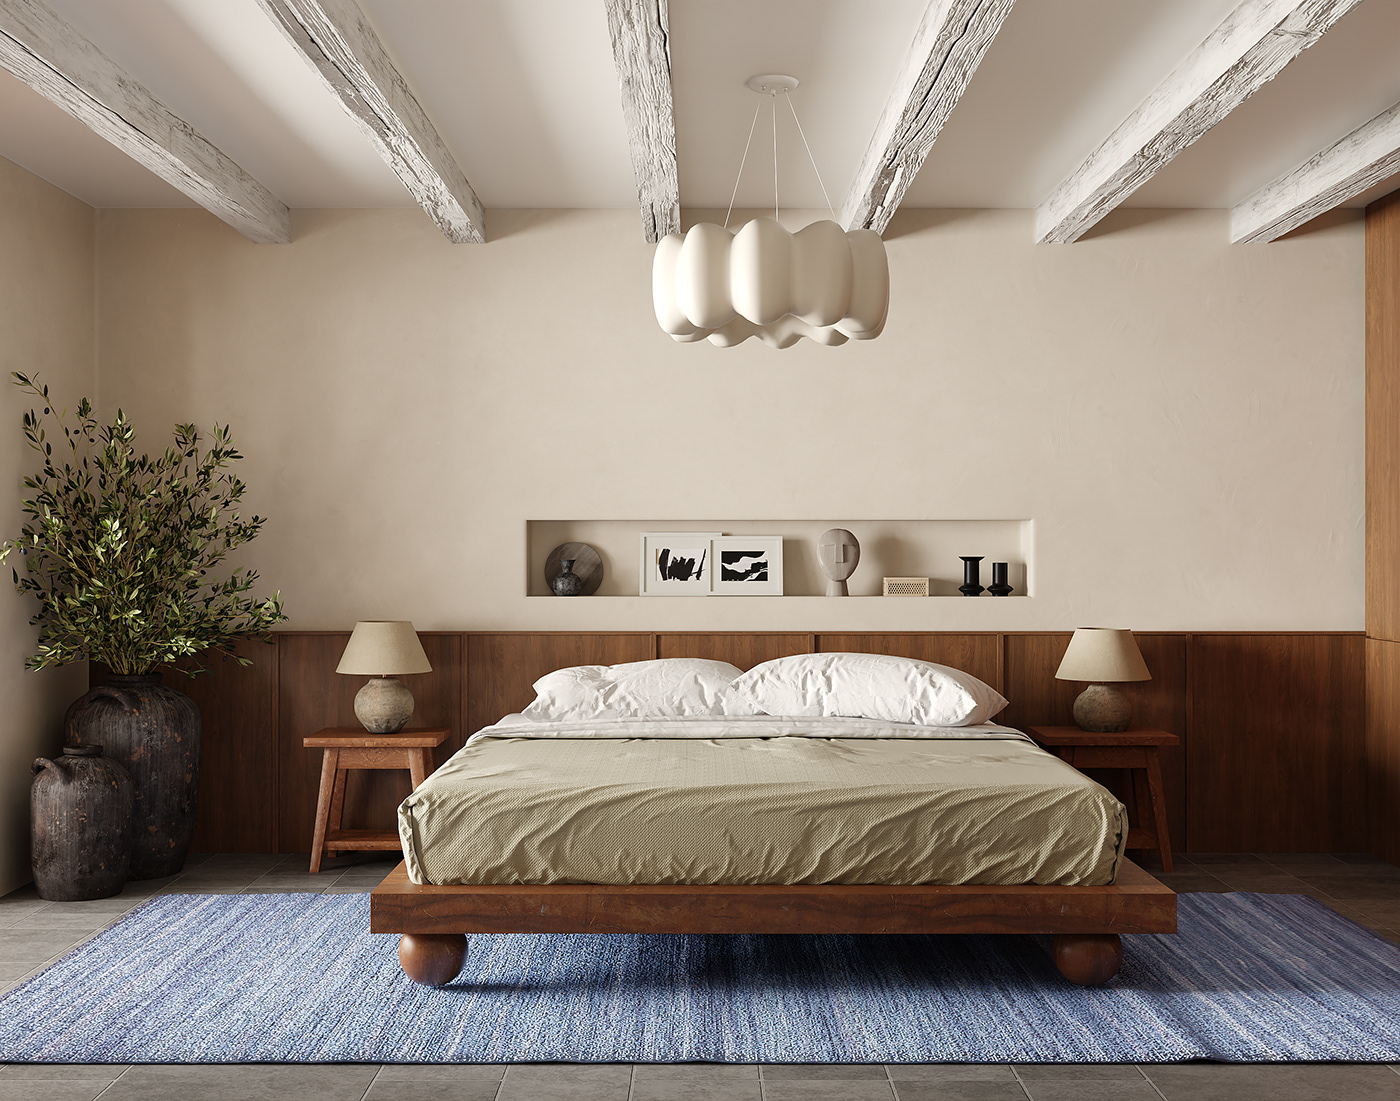 Greece hotel bedroom interior design  Render architecture visualization archviz corona CGI